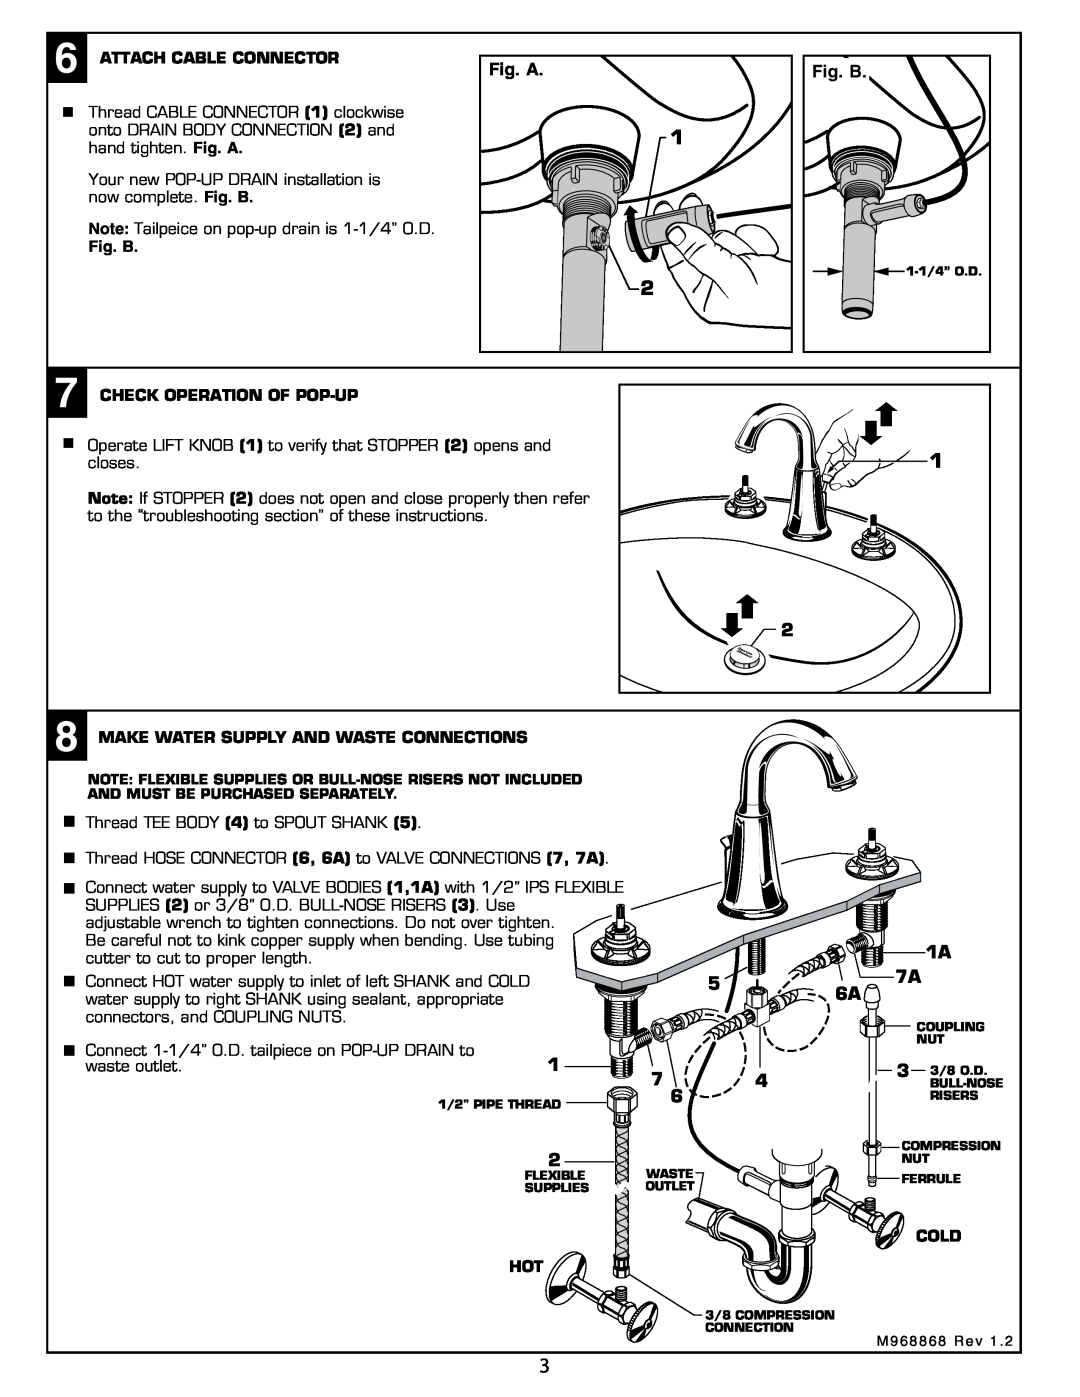 American Standard 7038 installation instructions Fig. A, Fig. B 